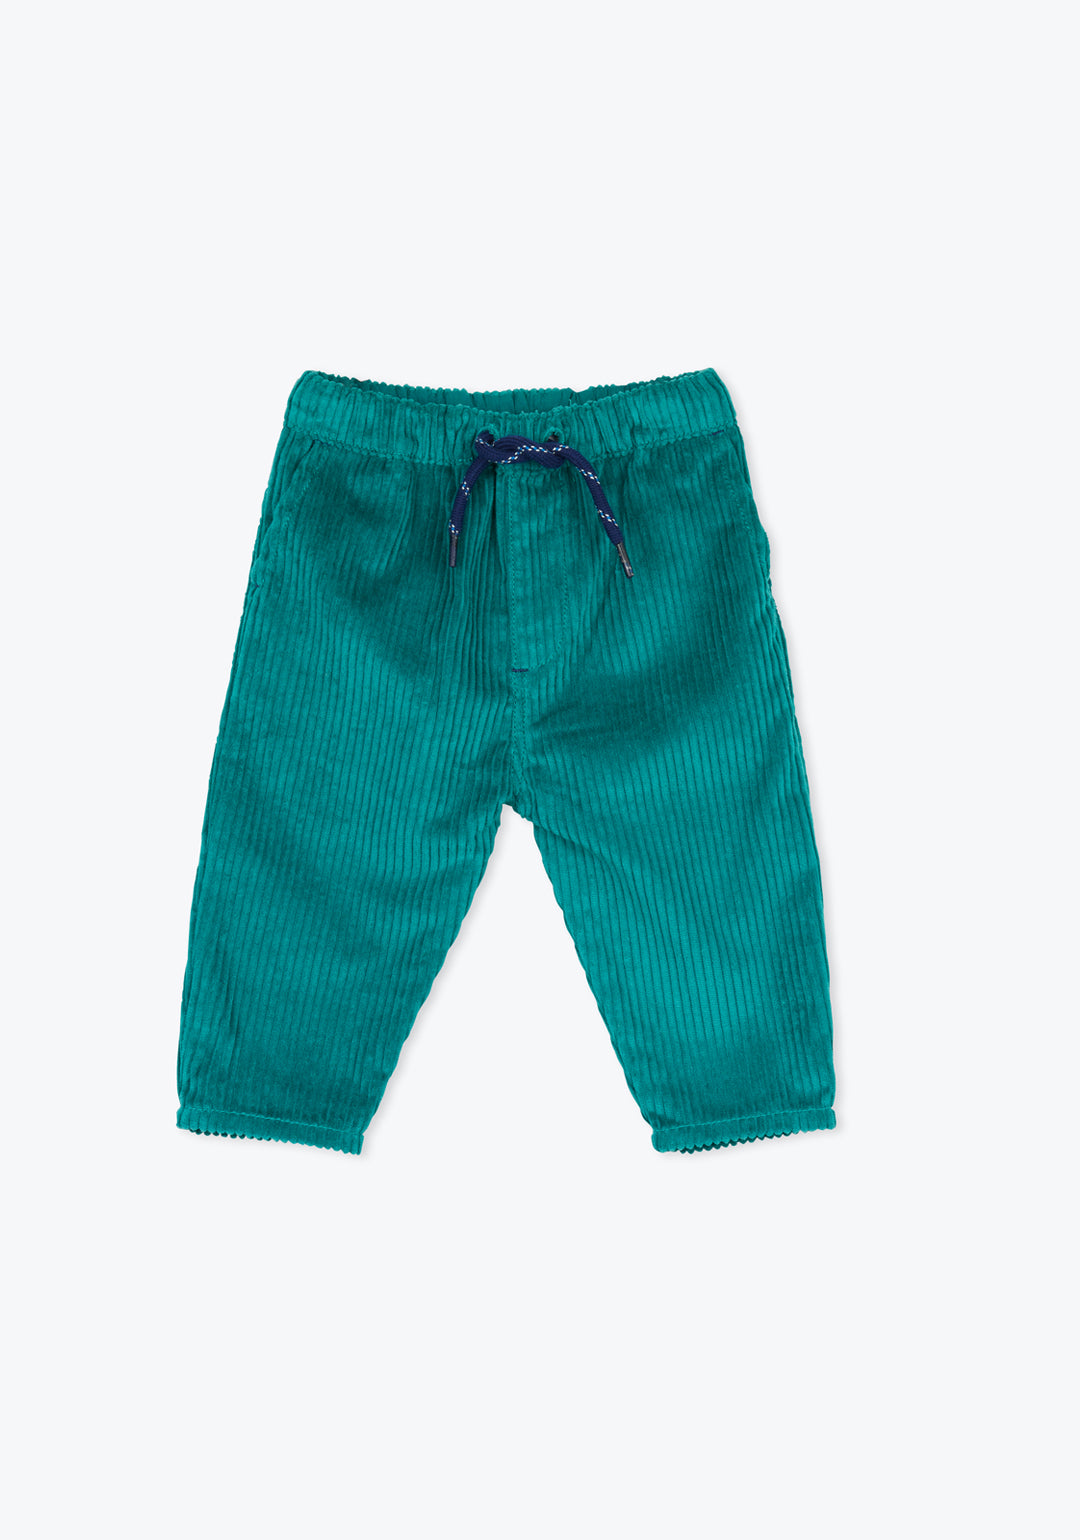 Green Velour Baby Pants